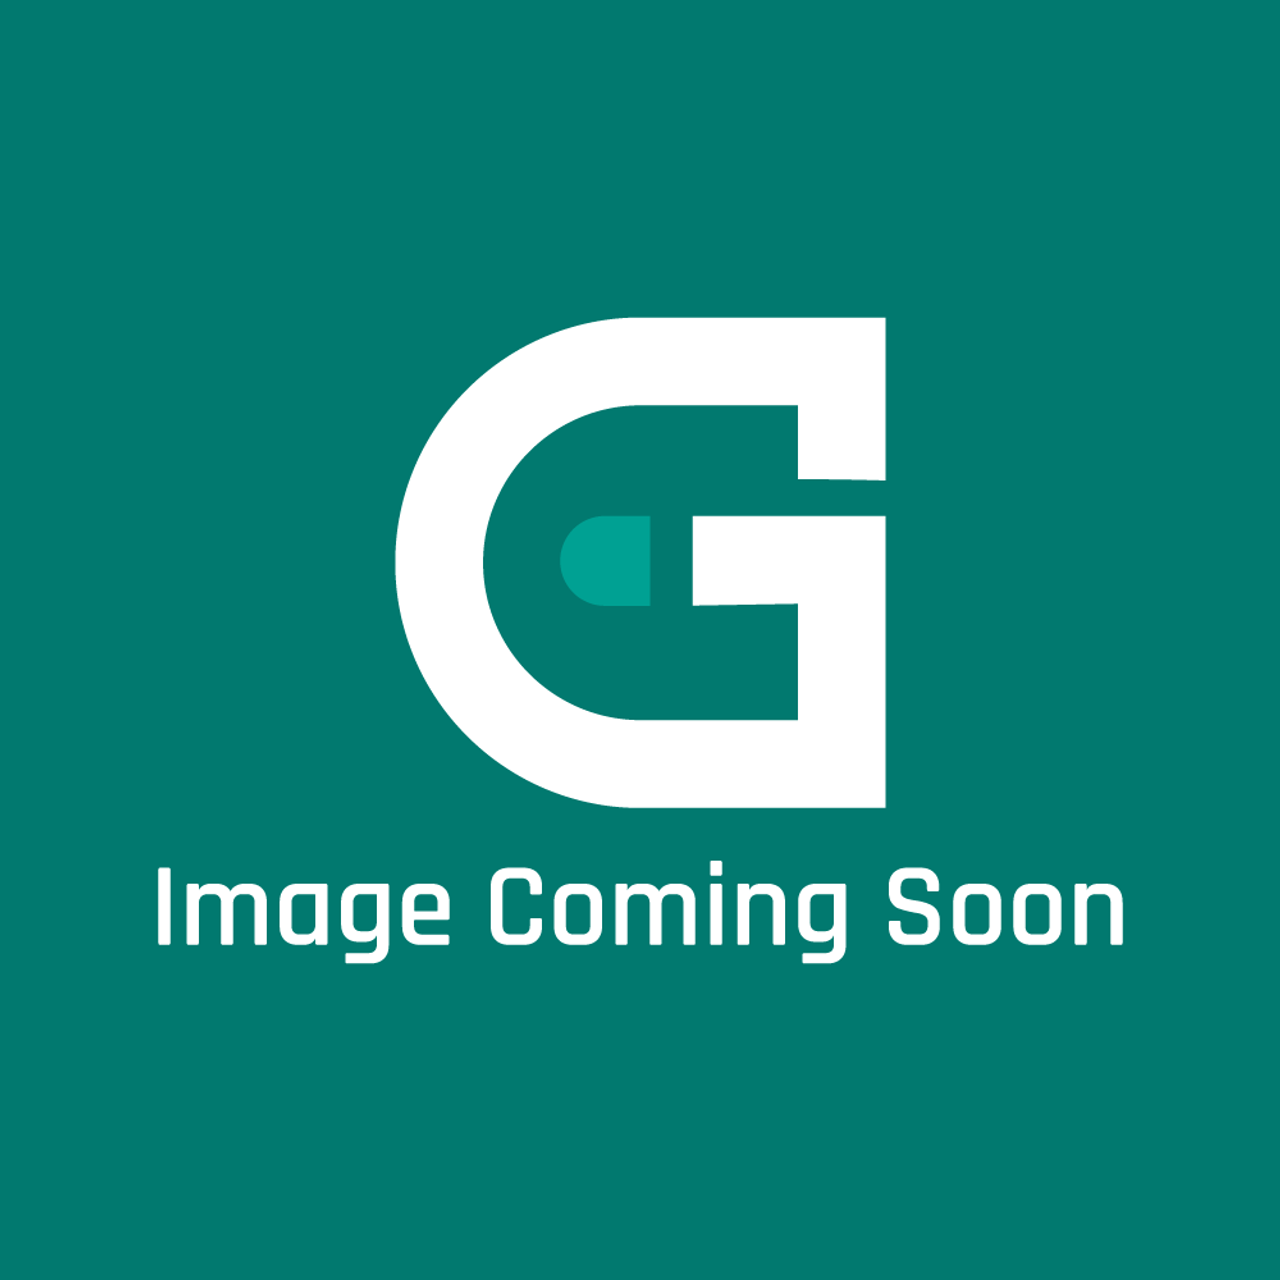 GE Appliances WE18M54 - Filter Asm - Image Coming Soon!